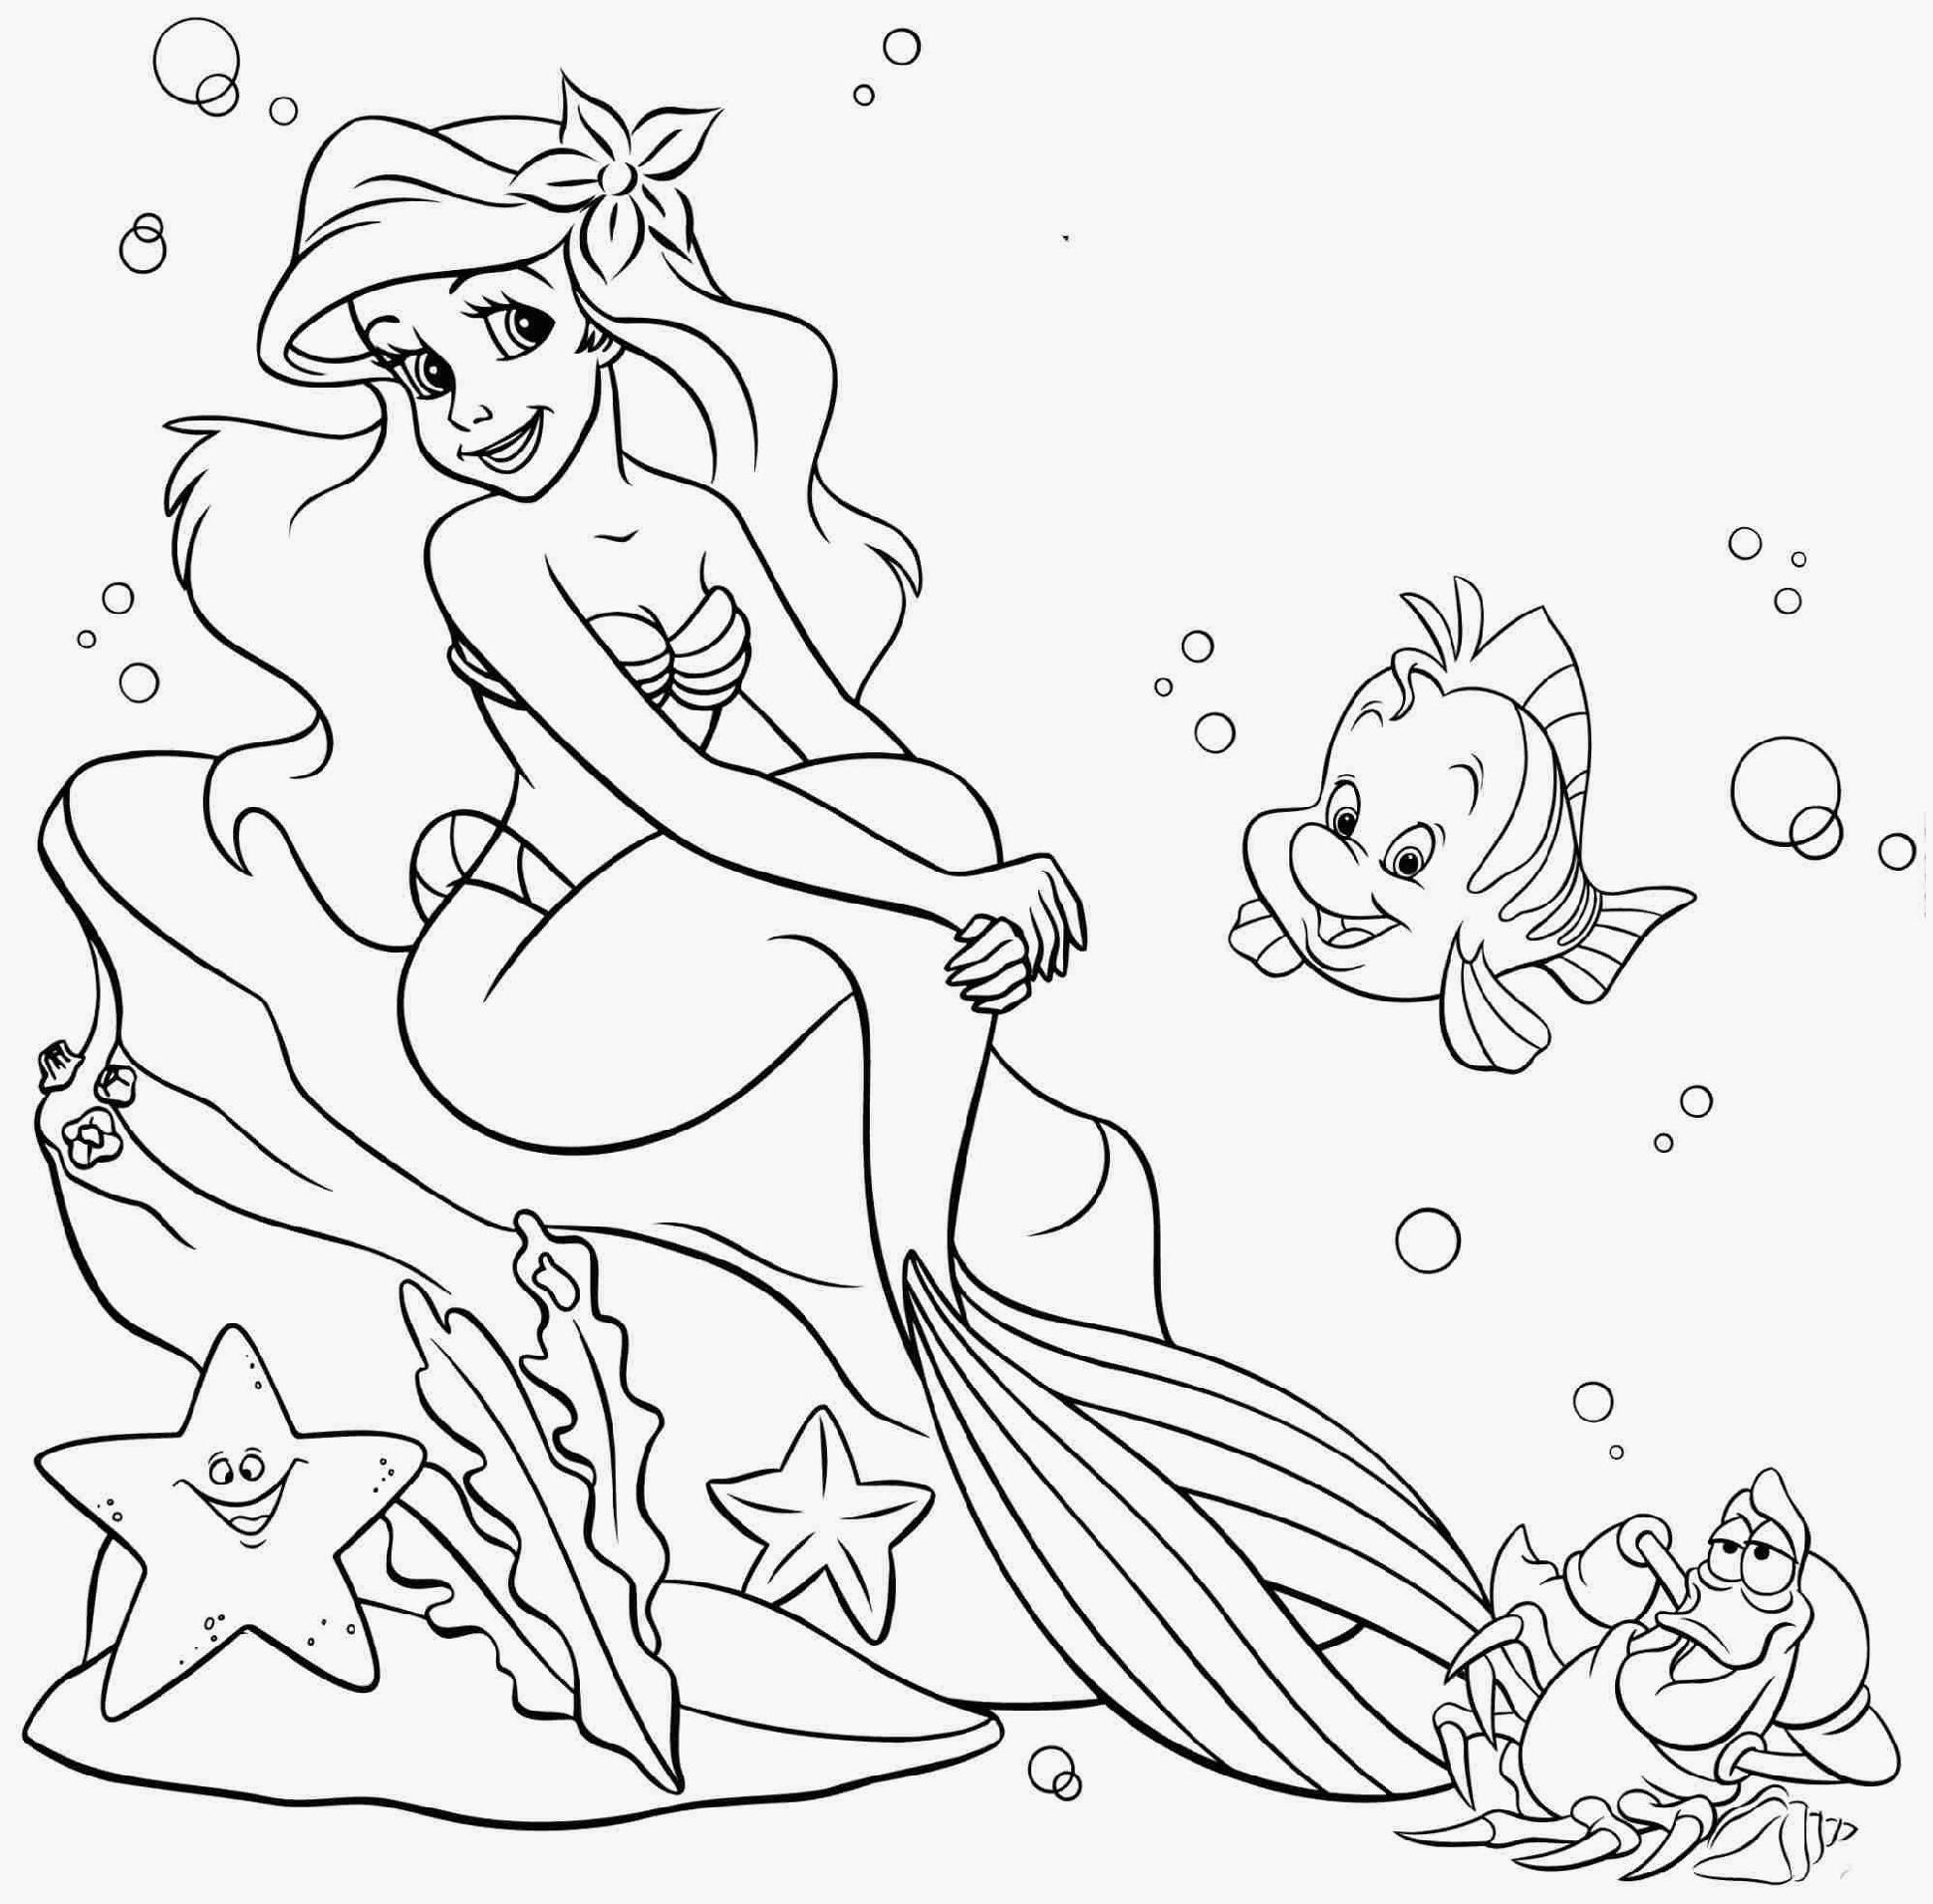 Mako Mermaids coloring pages h2o pl�tzlich meerjungfrau. h20 just